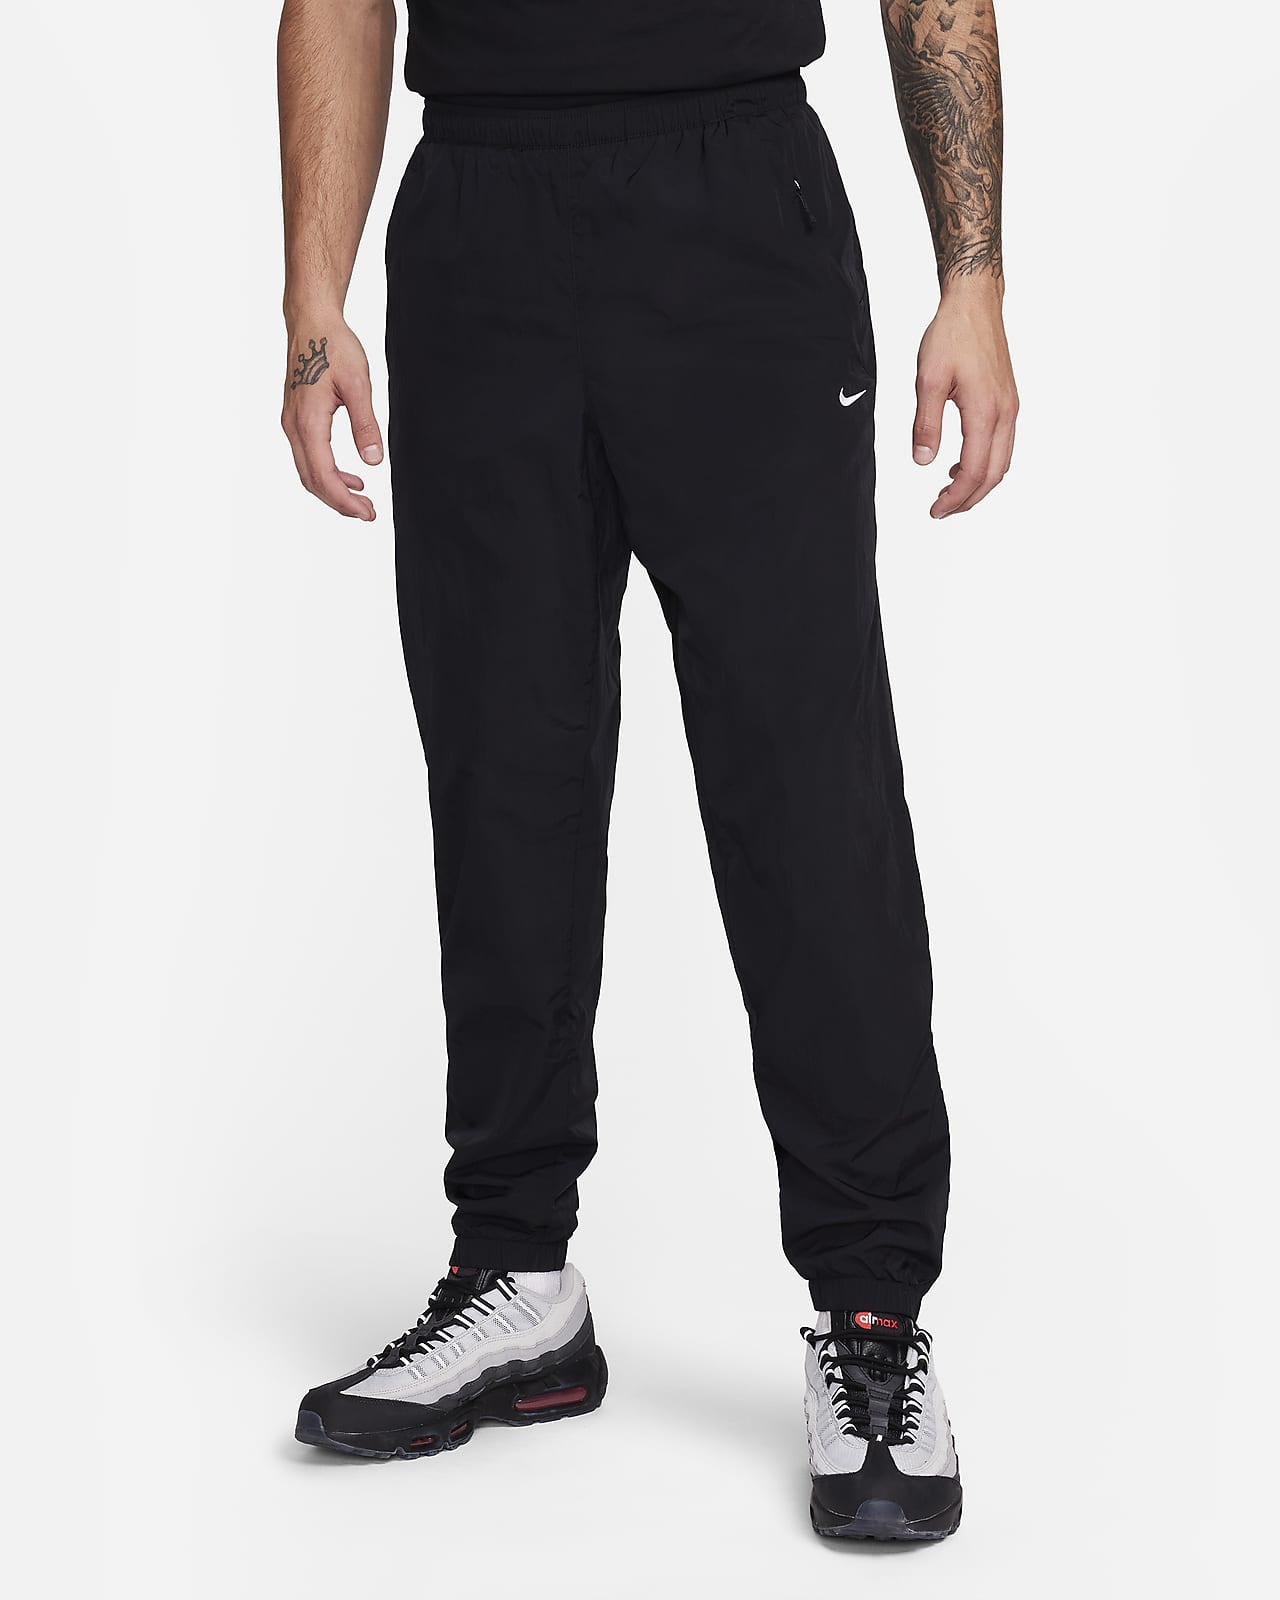 Nike Culture of Football Men's Therma-FIT Repel Soccer Pants.